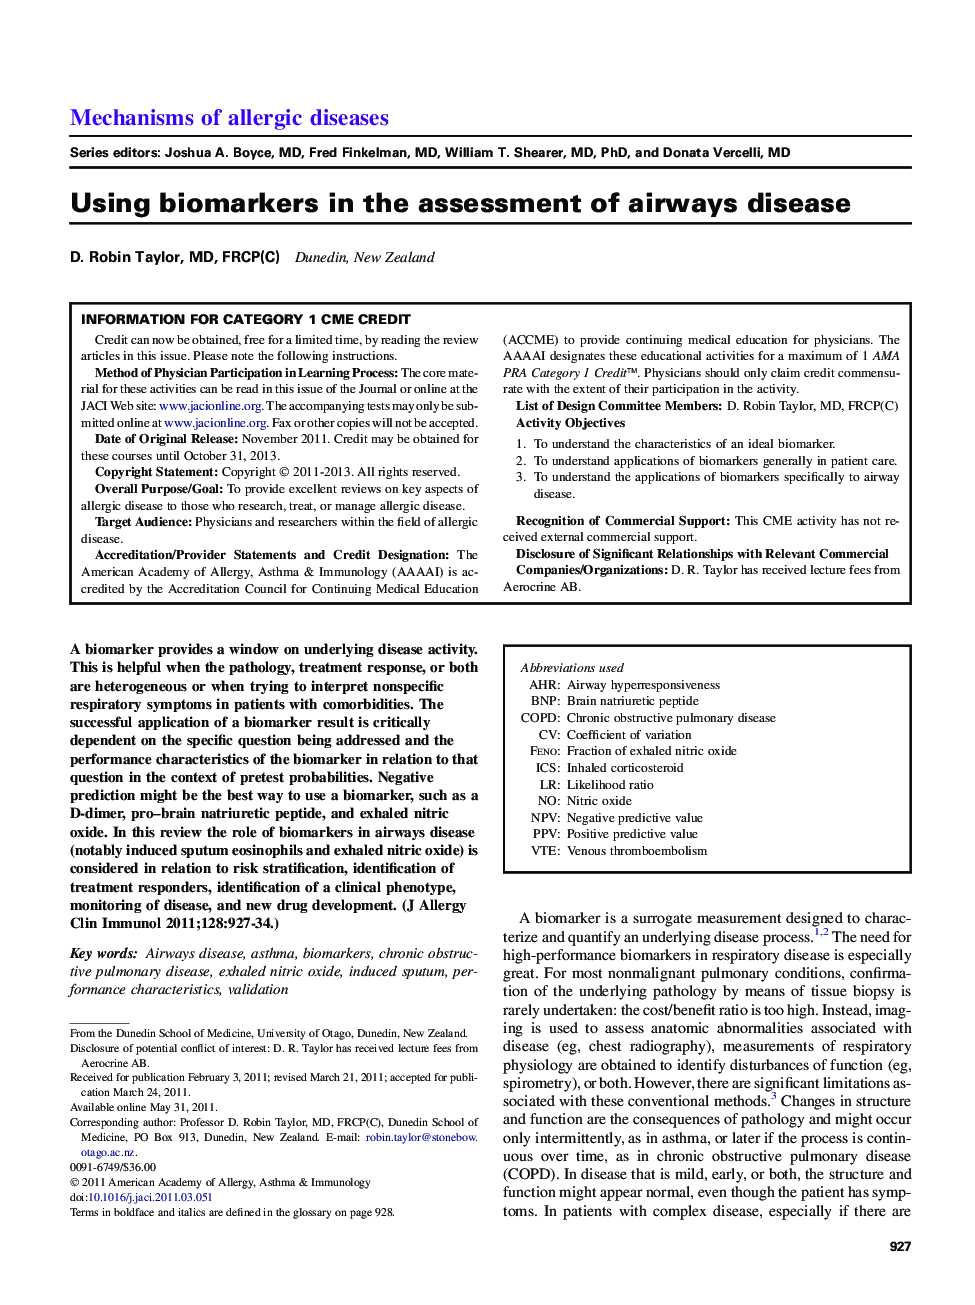 Using biomarkers in the assessment of airways disease 